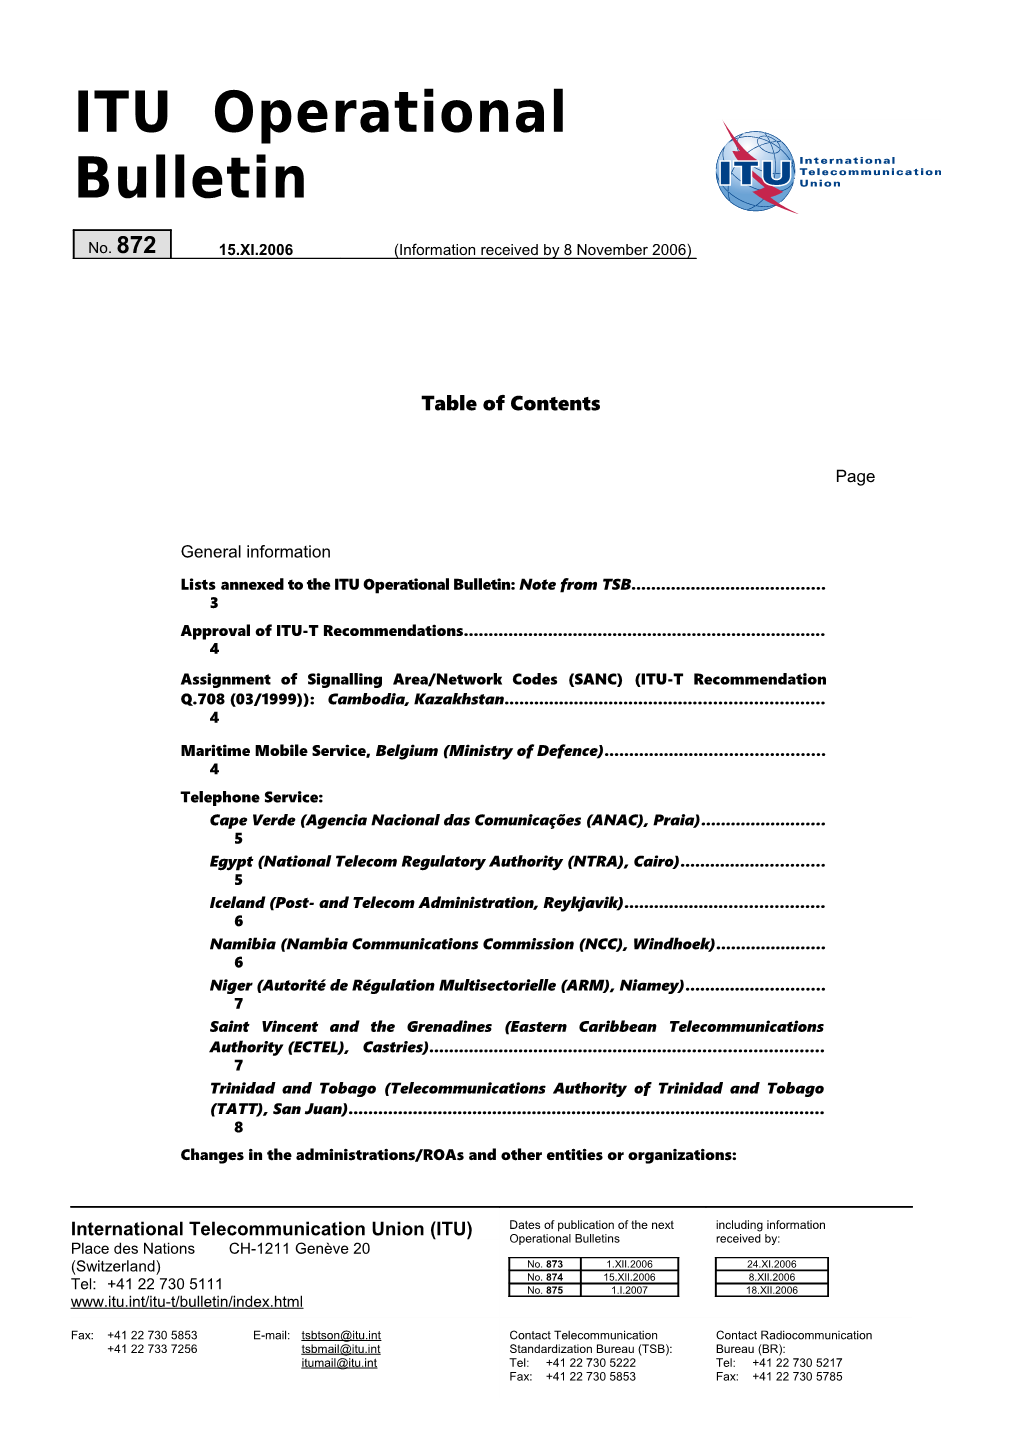 ITU Operational Bulletin No.872